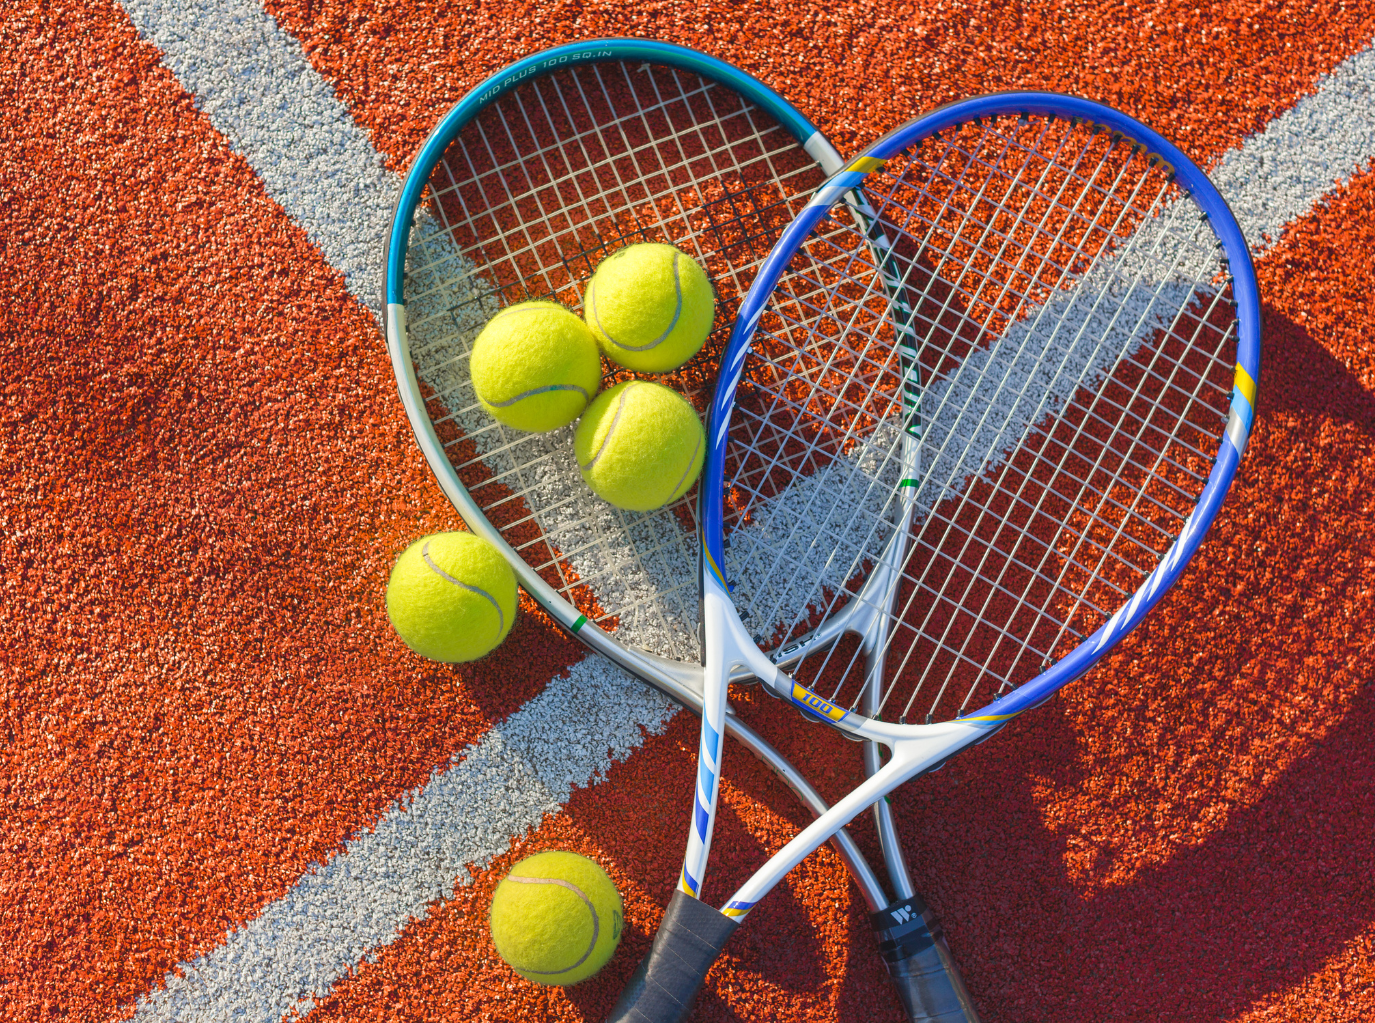 Mistringer | Tennis Racket Stringing Machine